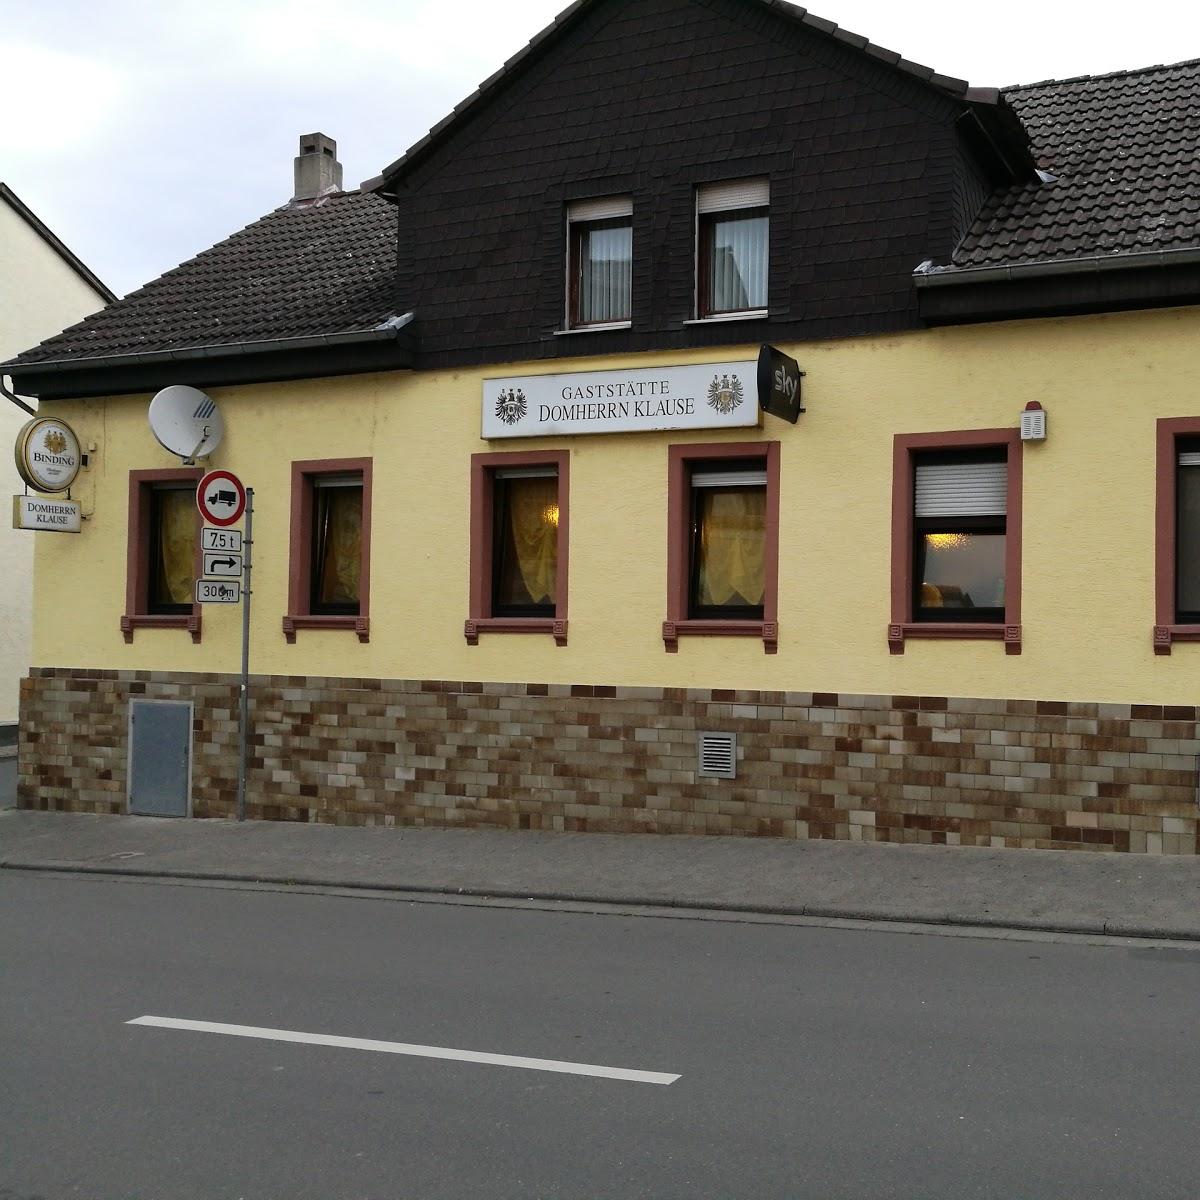 Restaurant "Domherrnklause" in Nieder-Olm